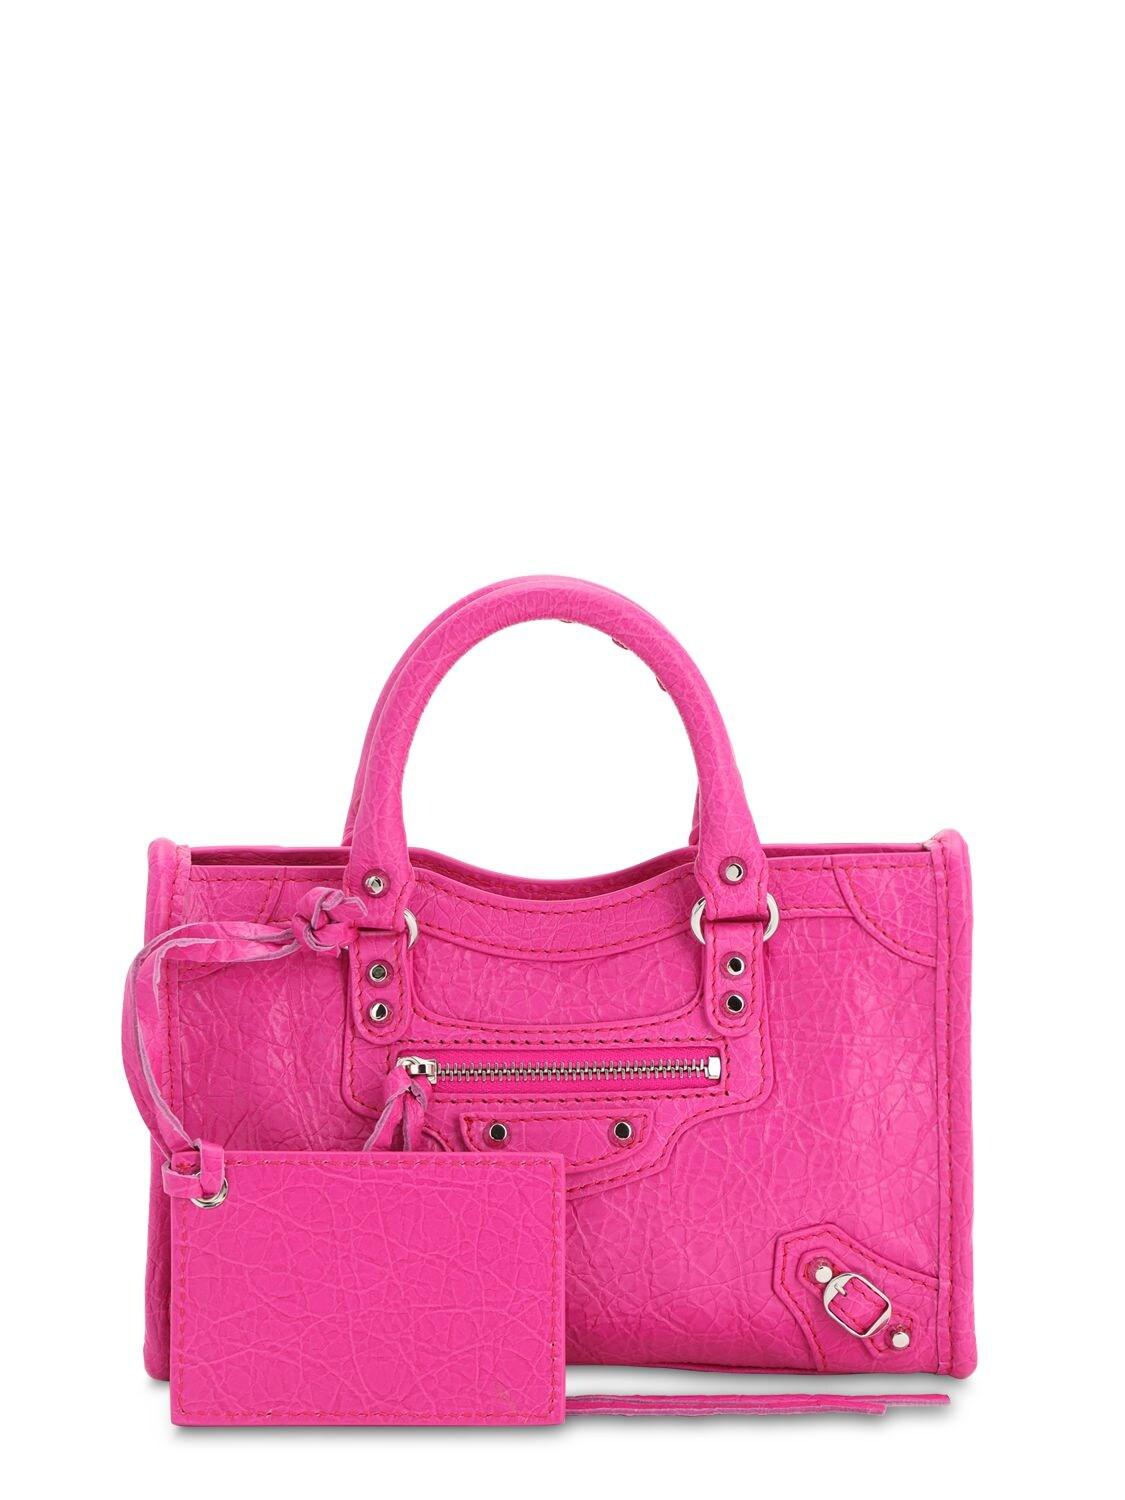 Balenciaga Nano City Leather Bag in Pink | Lyst